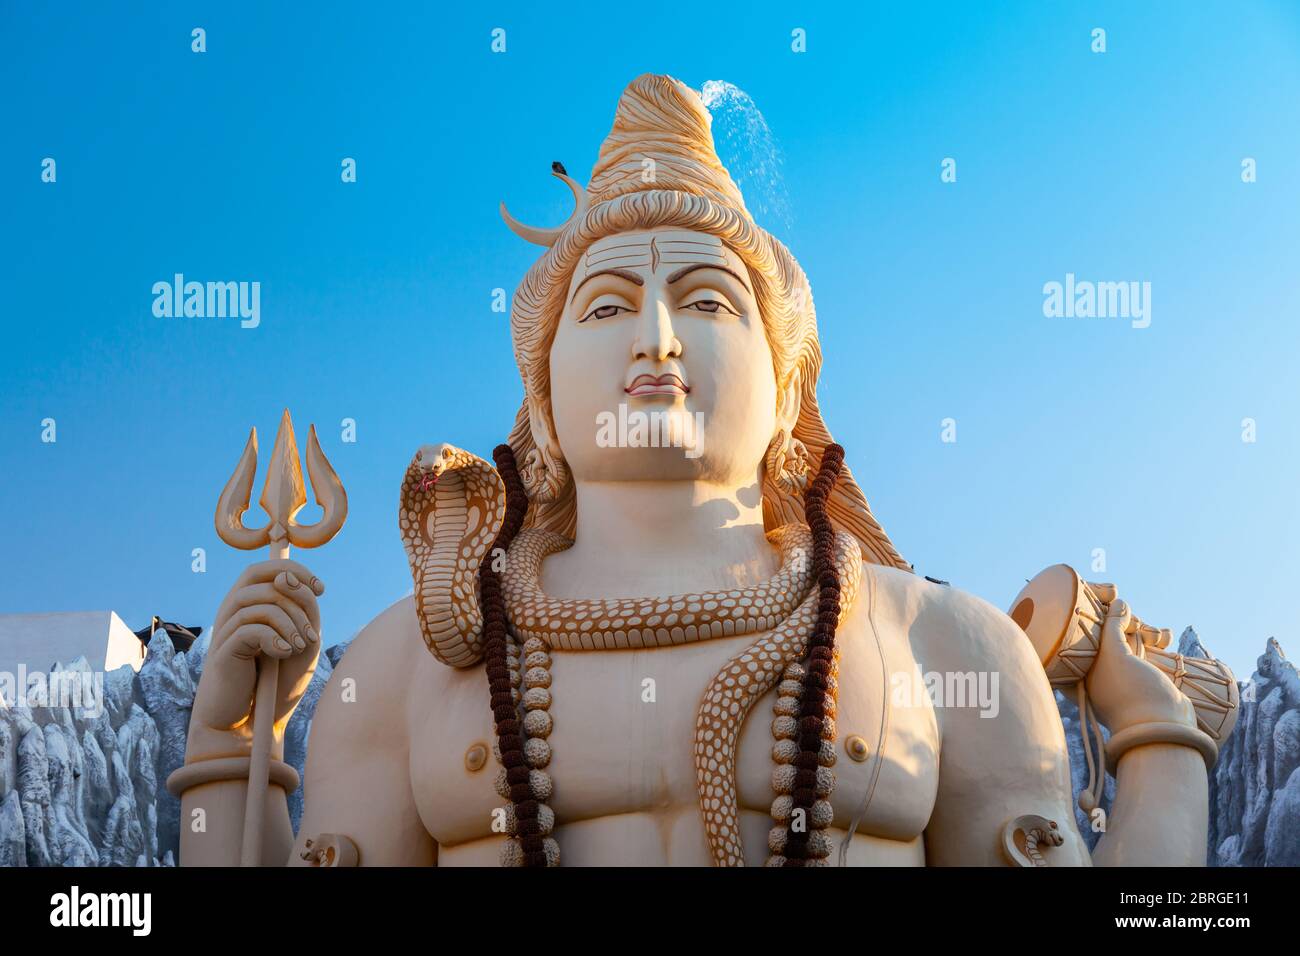 Lord Shiva Statue am Shivoham Shiva Tempel, in Bangalore City in Karnataka, Indien Stockfoto